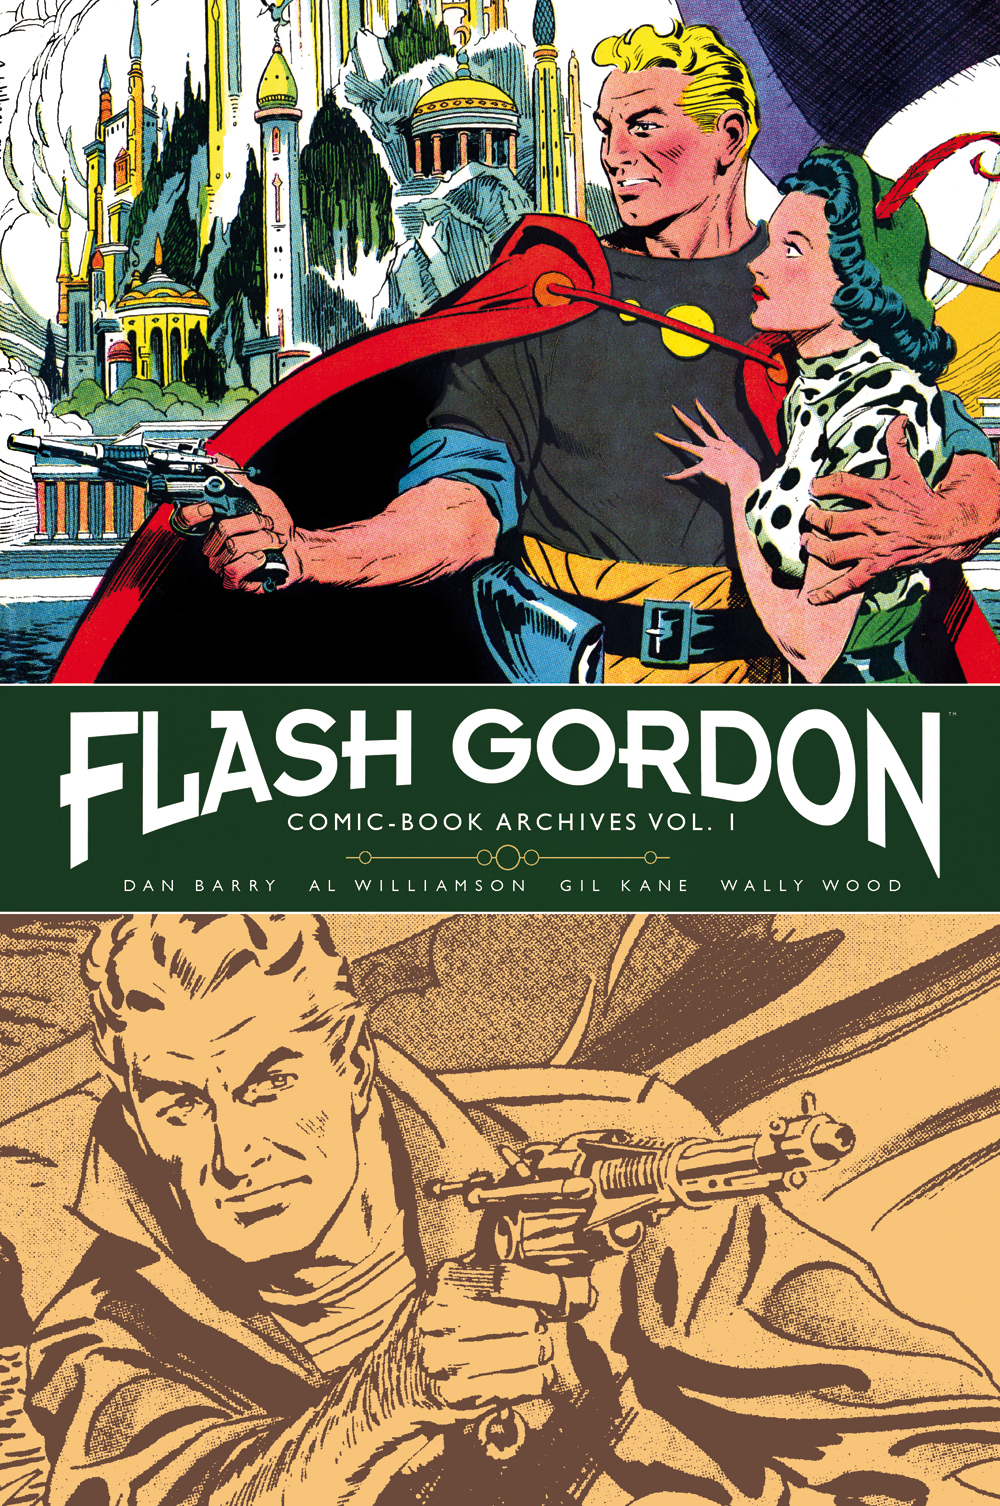 Flash Gordon: Comic-book archives, Vol. 1